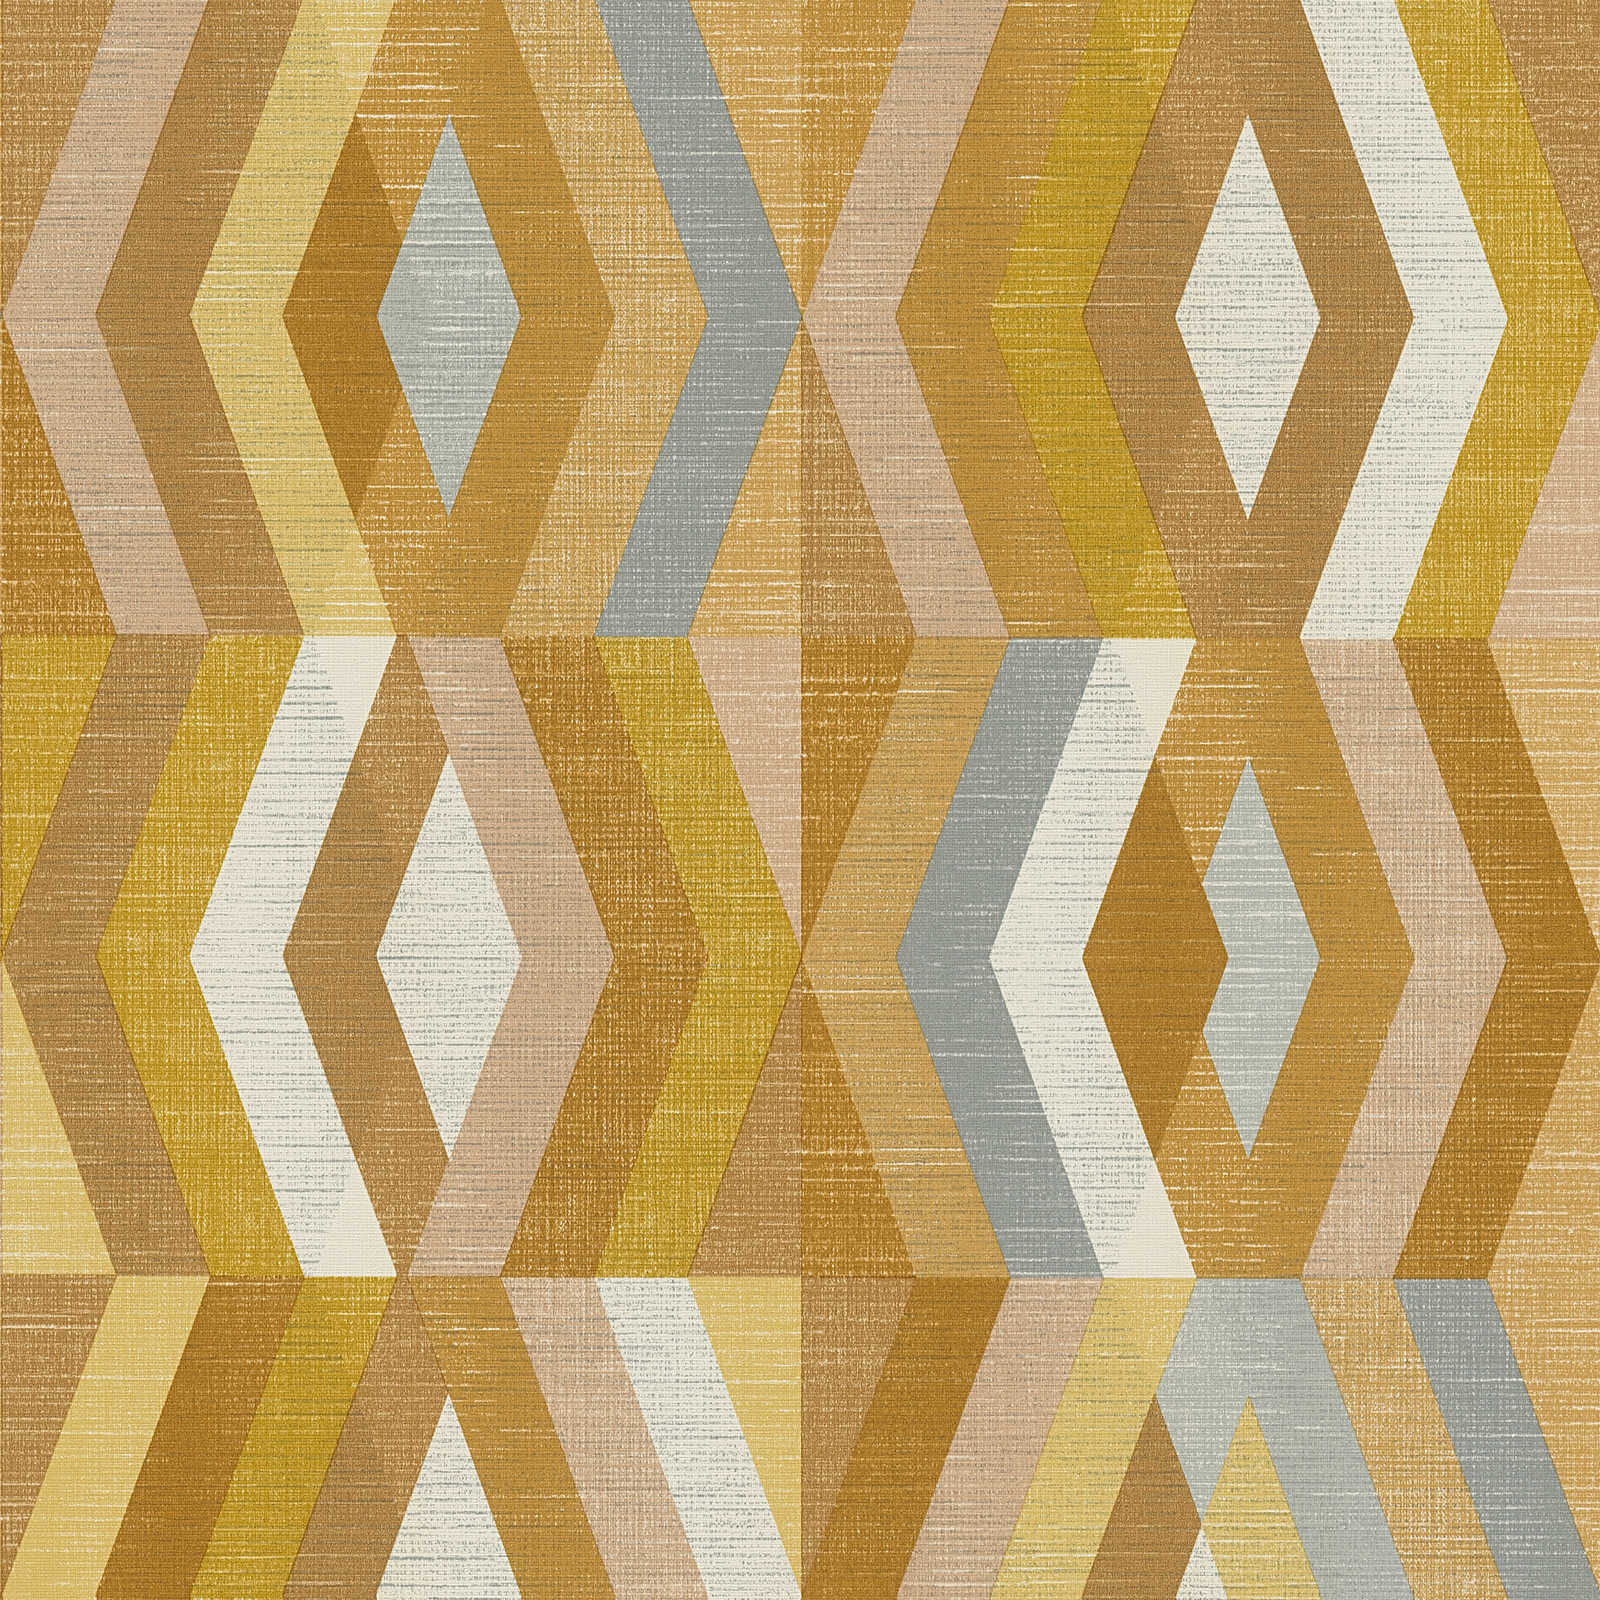         wallpaper linen look with pattern in Scandinavian style - orange, yellow, grey
    